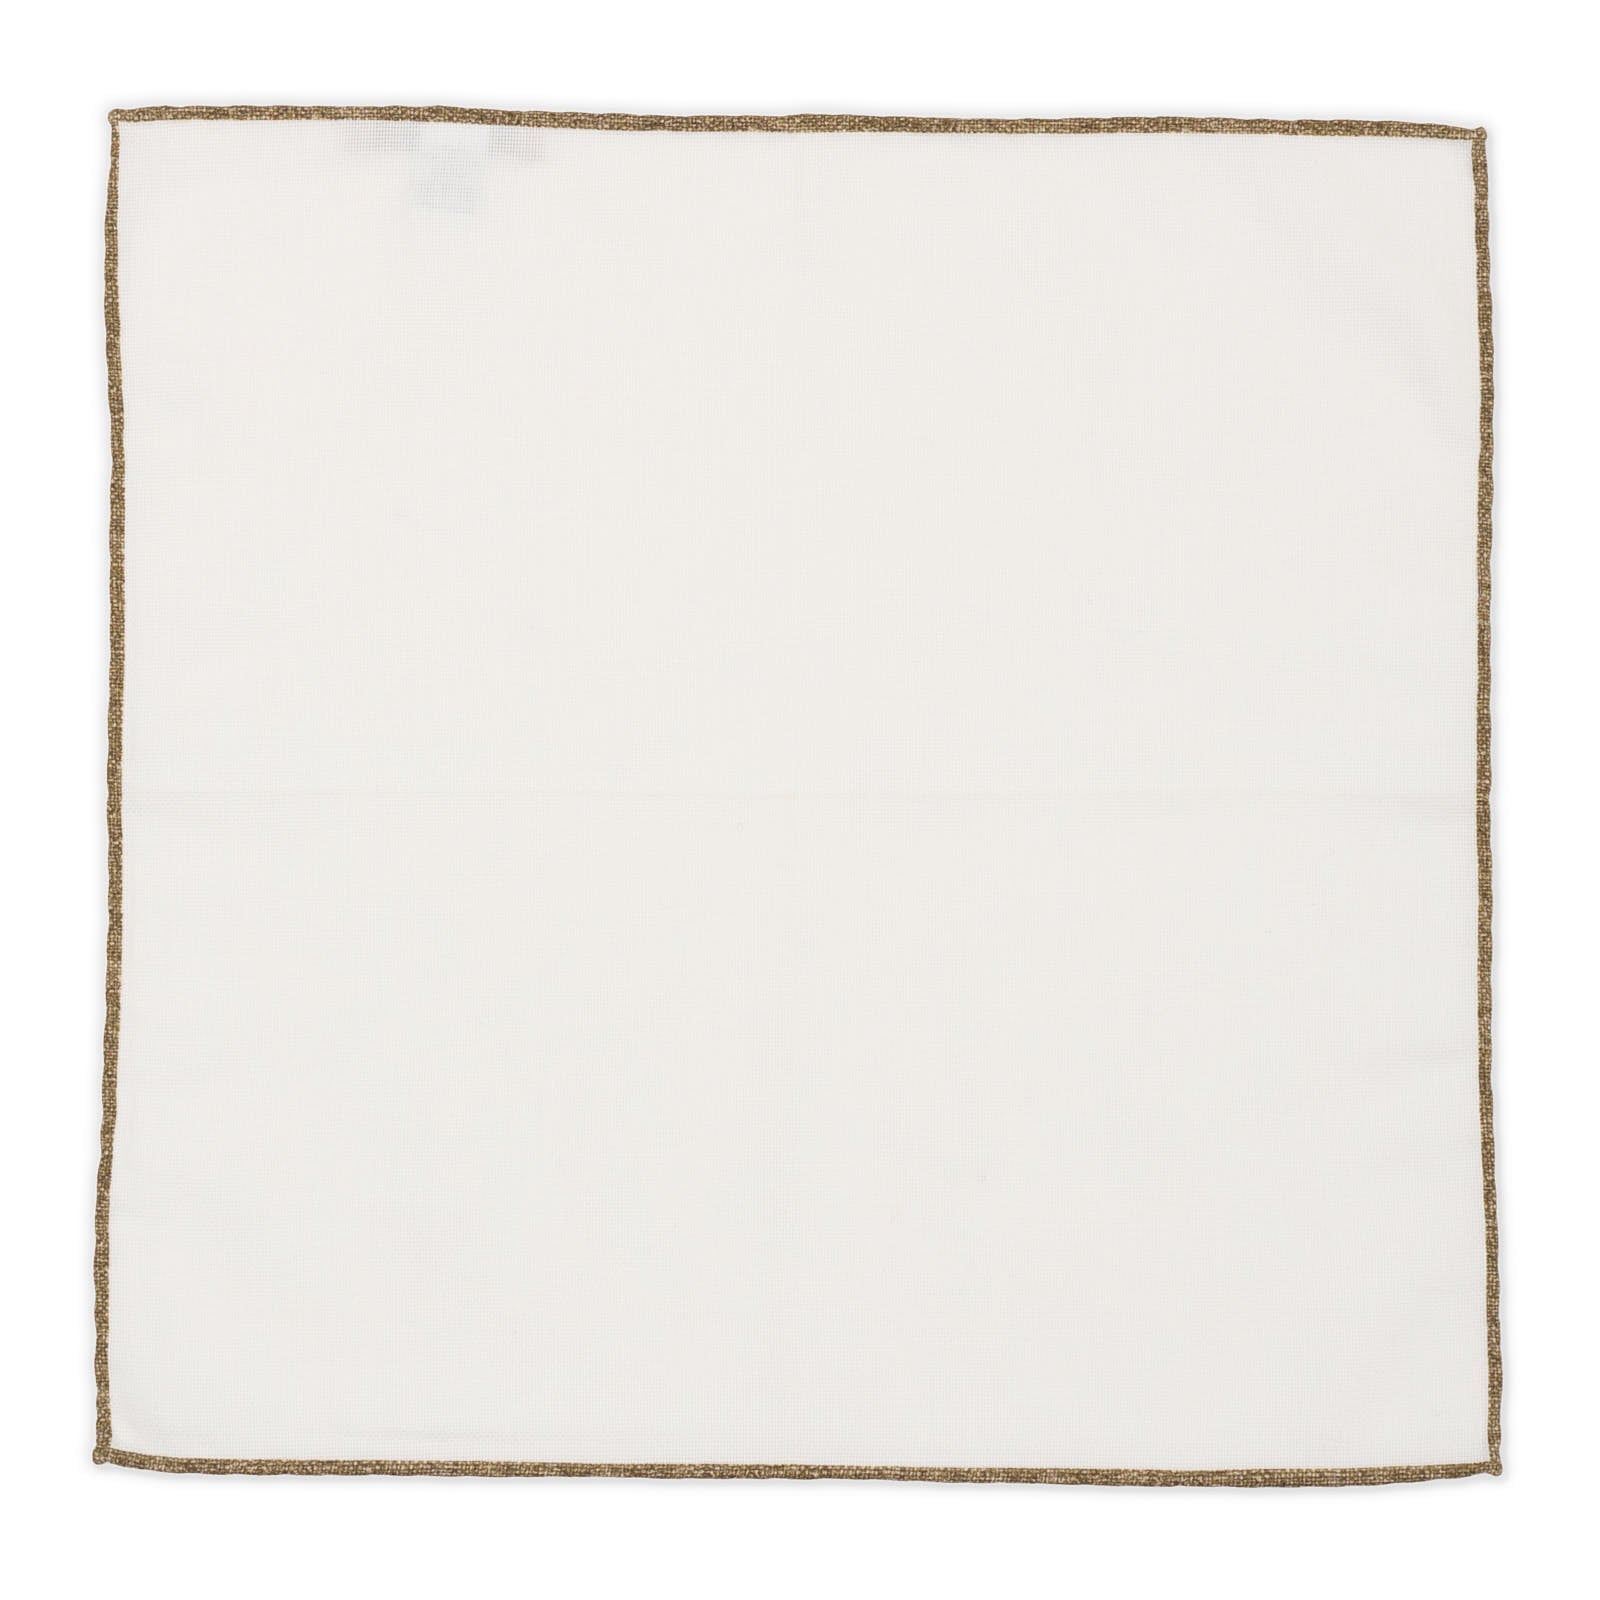 ROSI Handmade White-Brown Solid Cotton Pocket Square NEW 31cm x 31cm